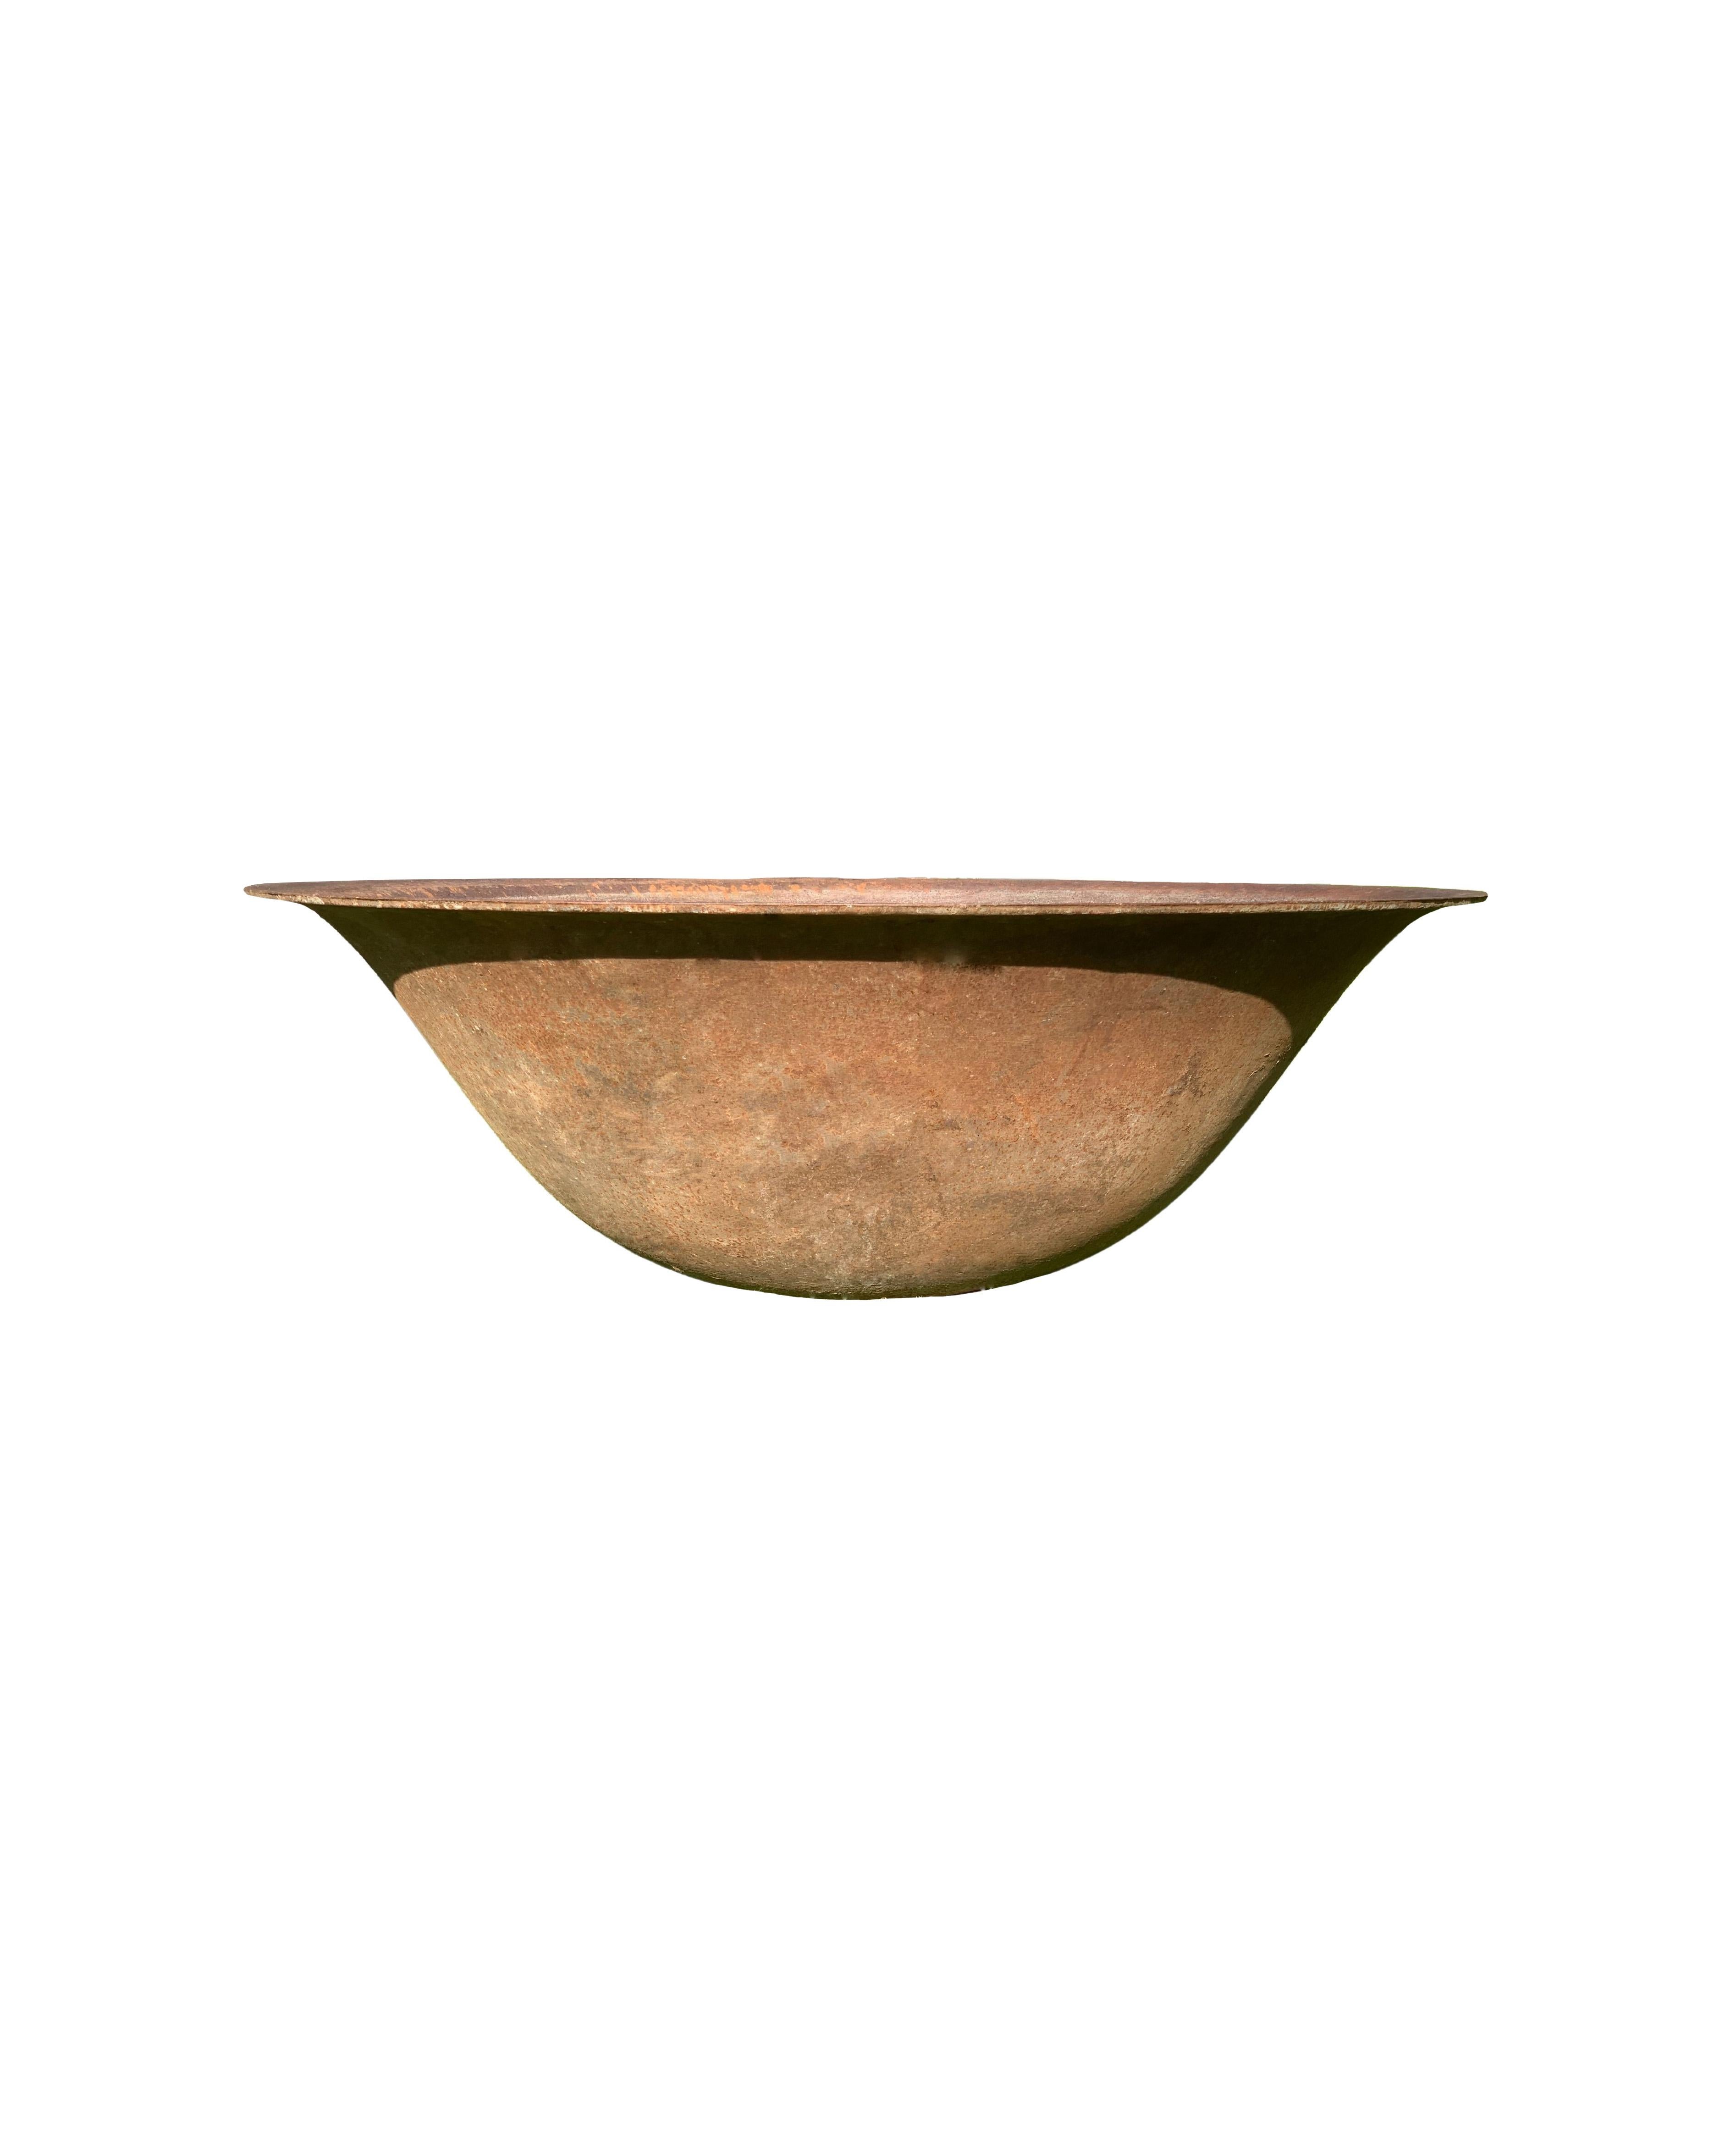 Organic Modern Antique Corten Steel Bowl / Garden Water Bowl / Planter / Fire Bowl For Sale